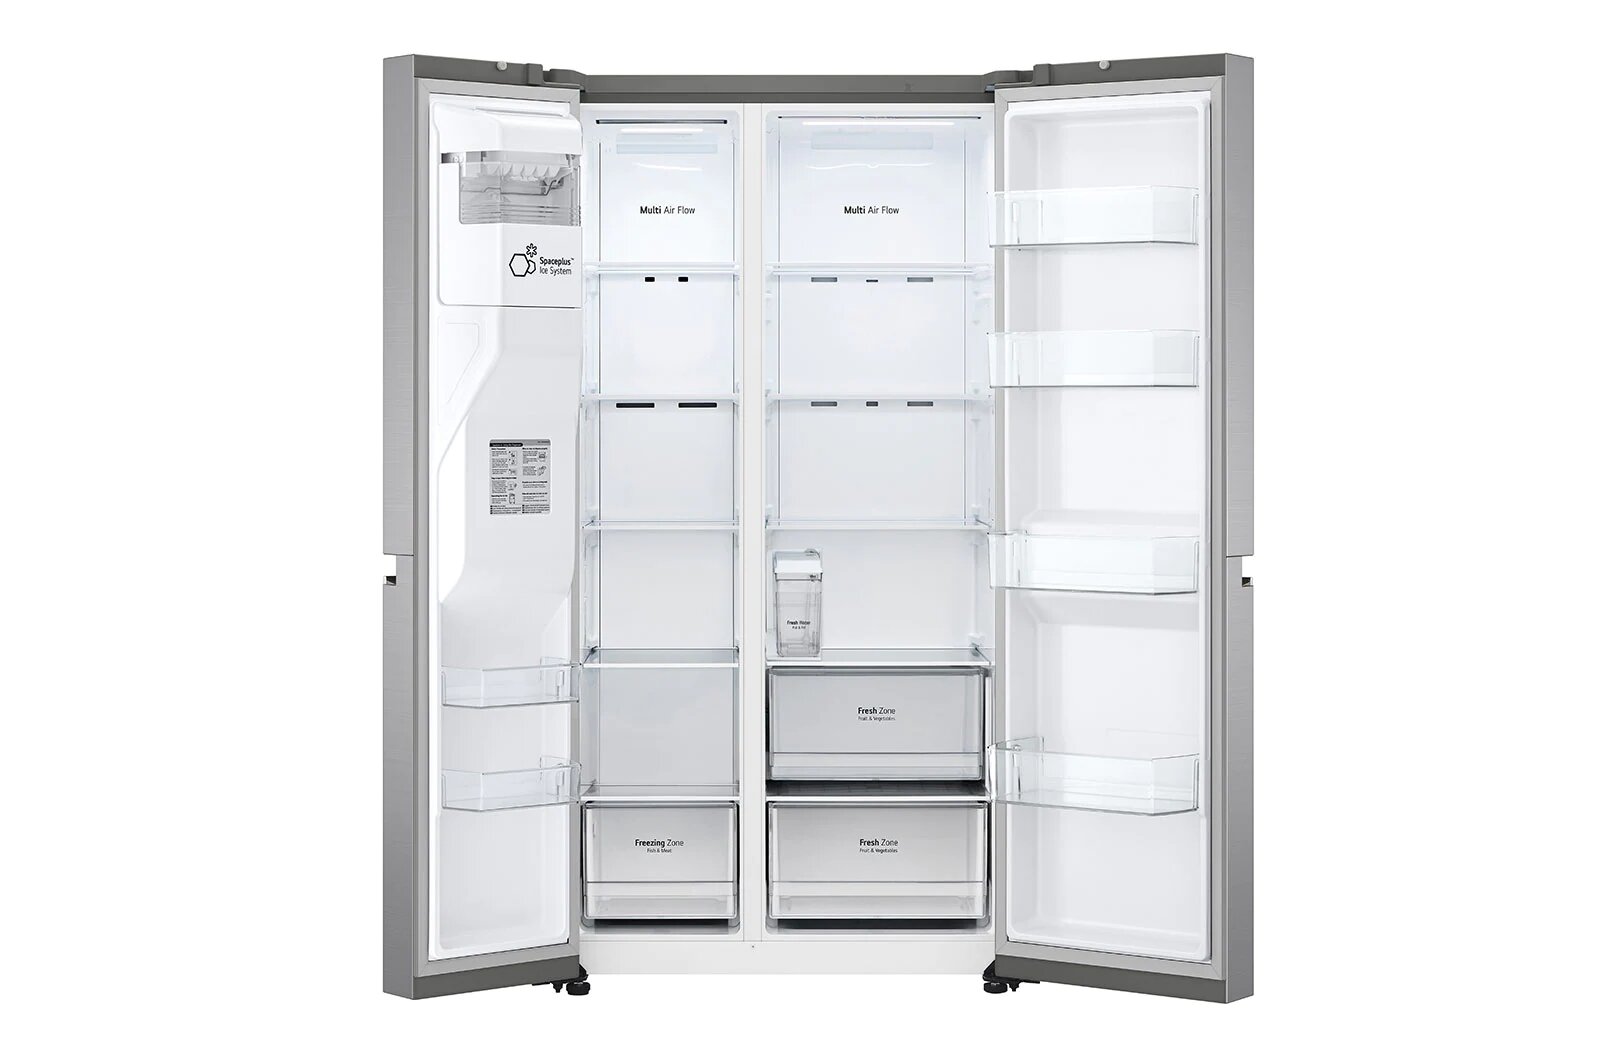 Refrigerador Duplex LG VS22LNIP 22 Pies con Despachador de Agua Platinum